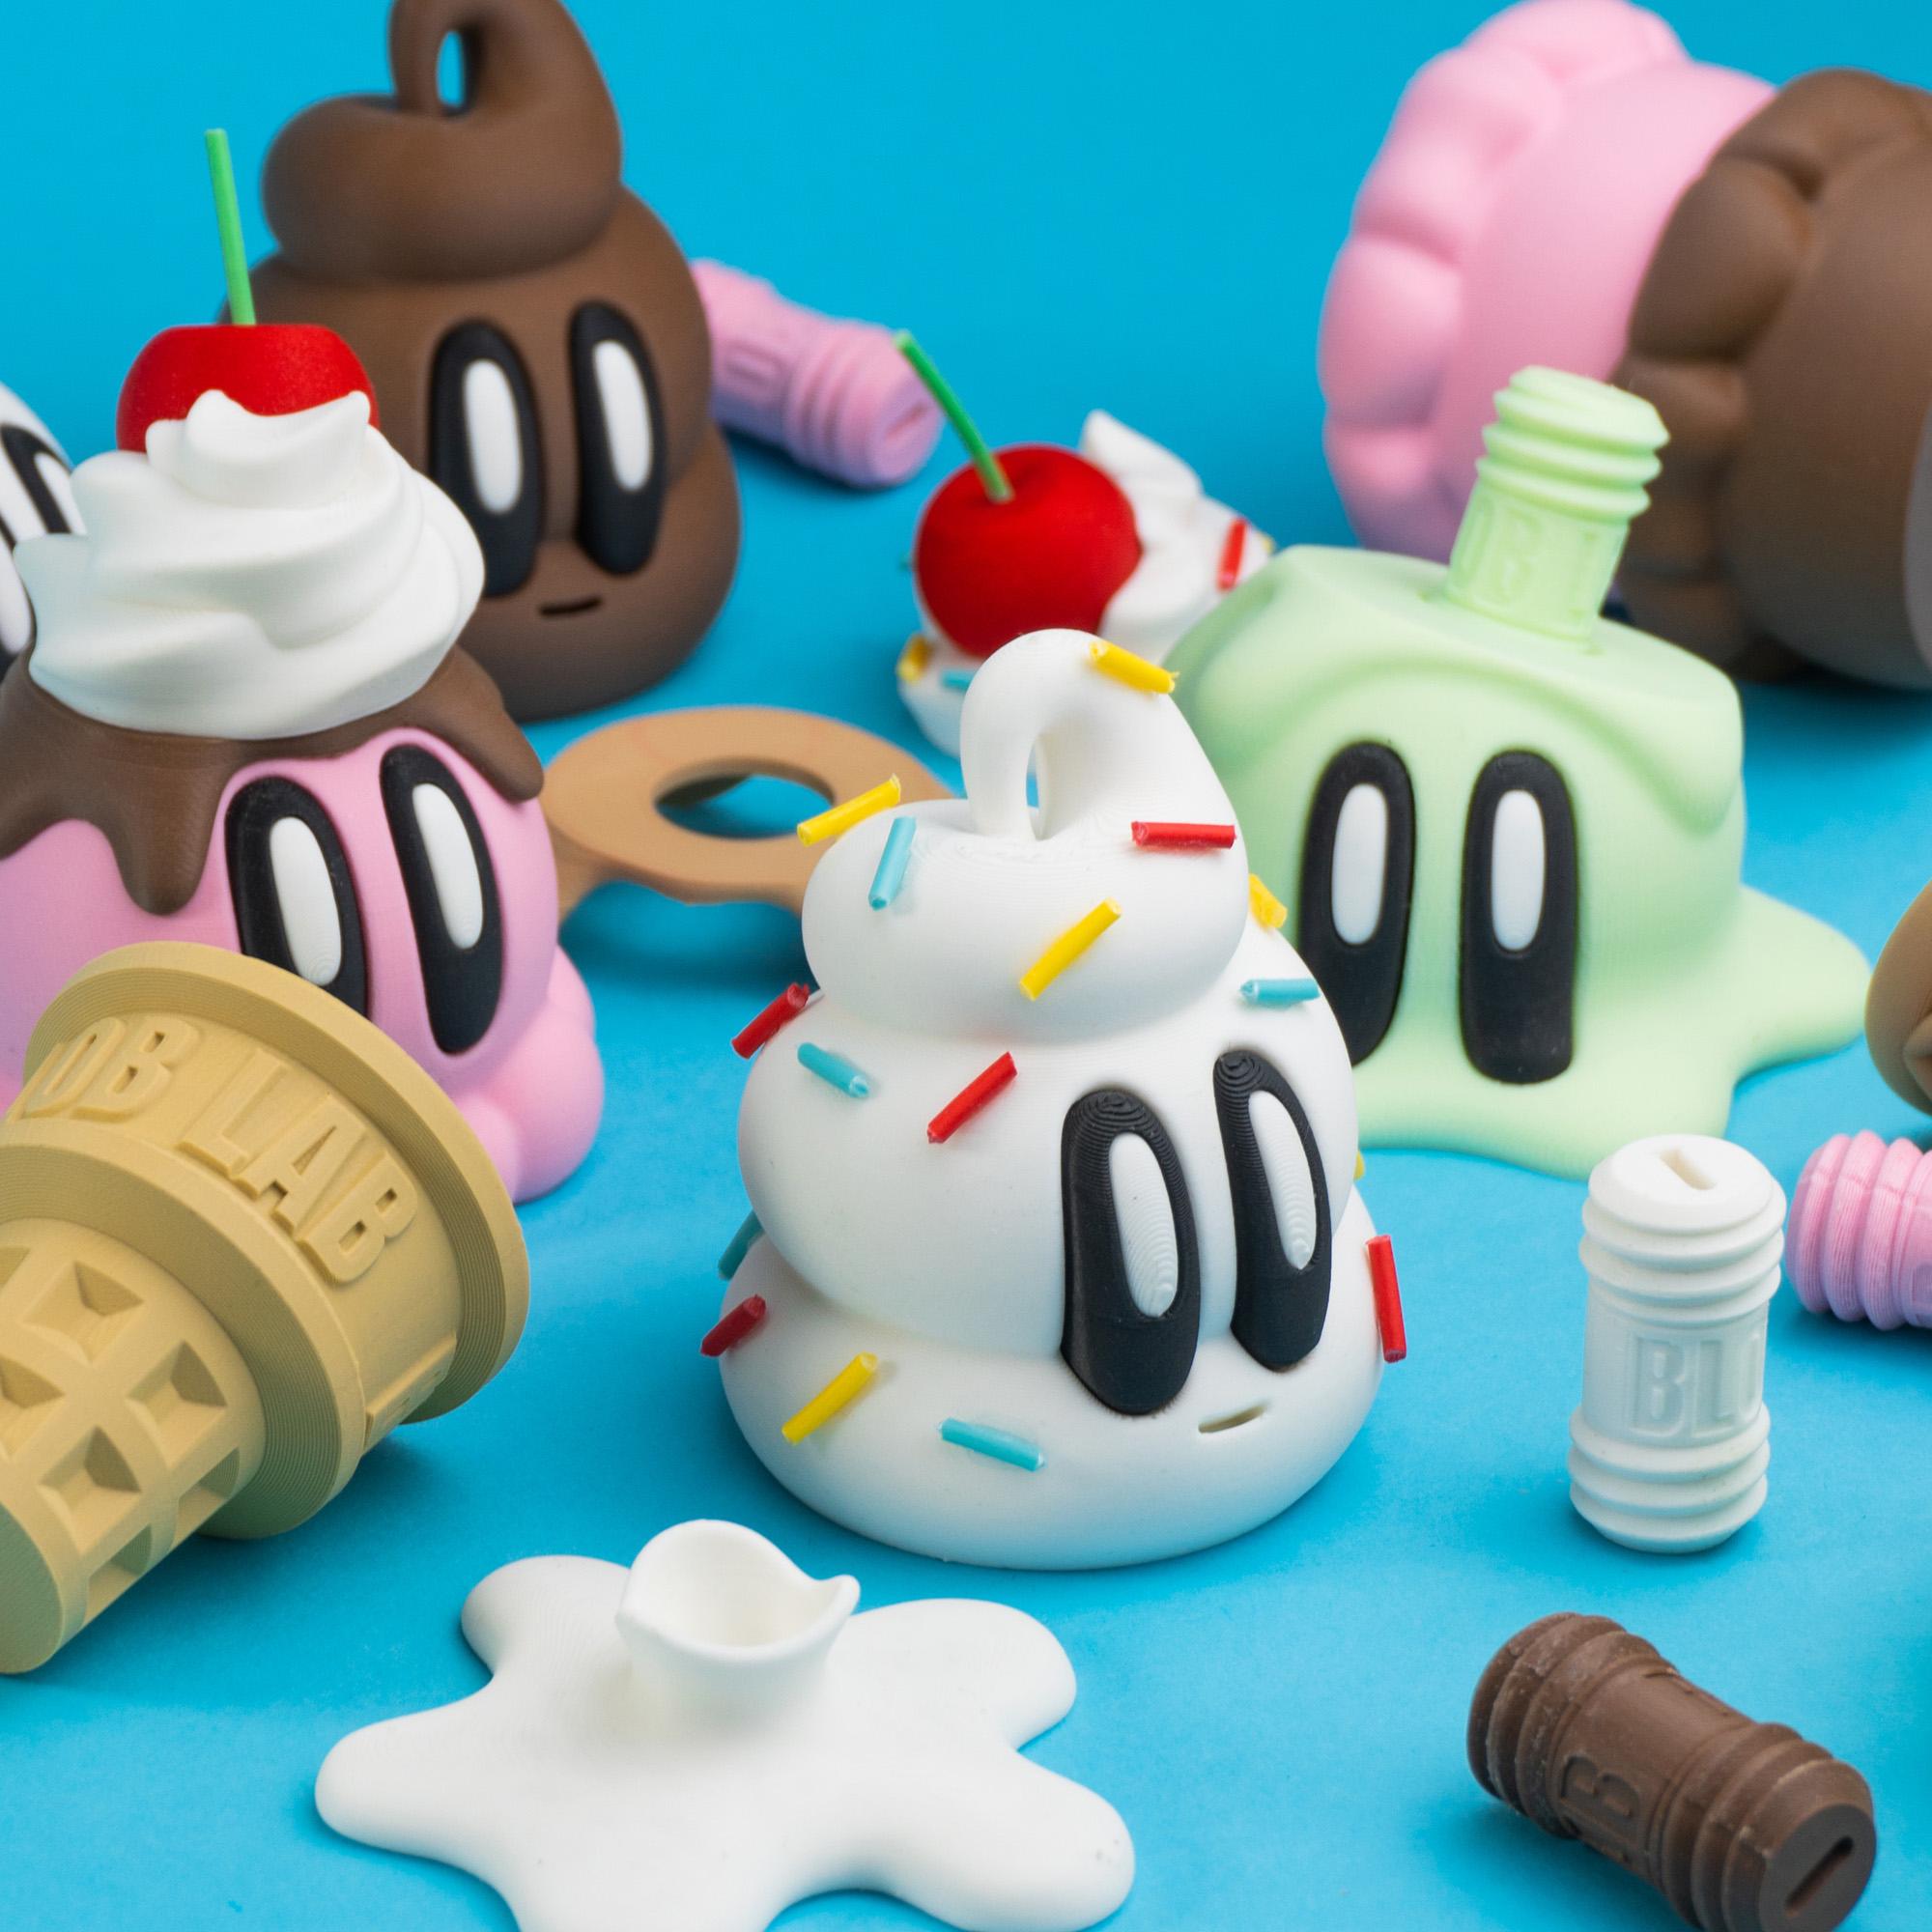 Blob Ice Cream - Modular Art Toy 3d model